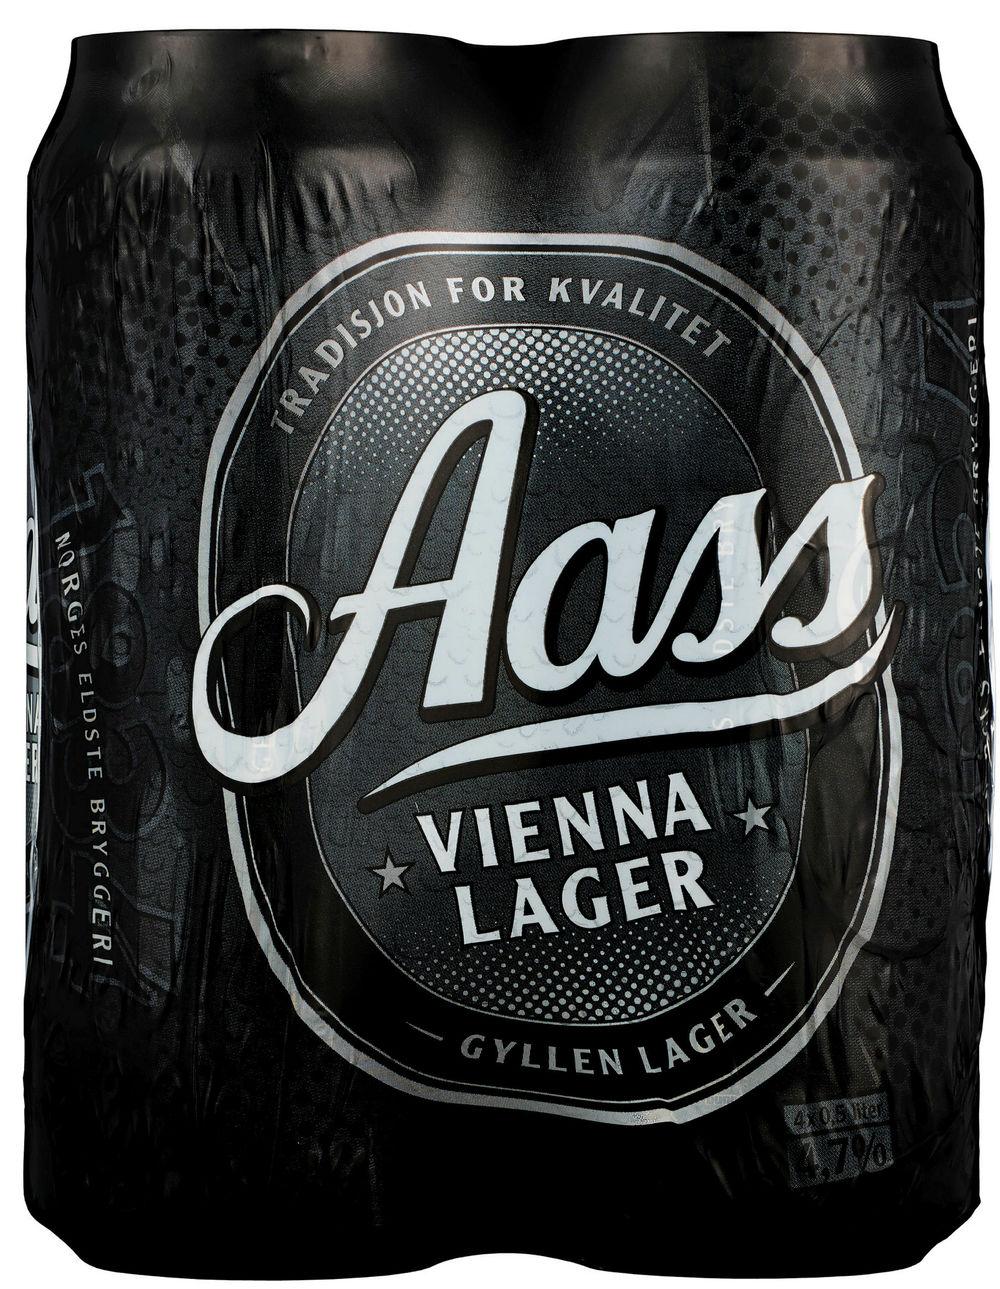 Aass Vienna Lager 4 x 0,5 liter, 2 l